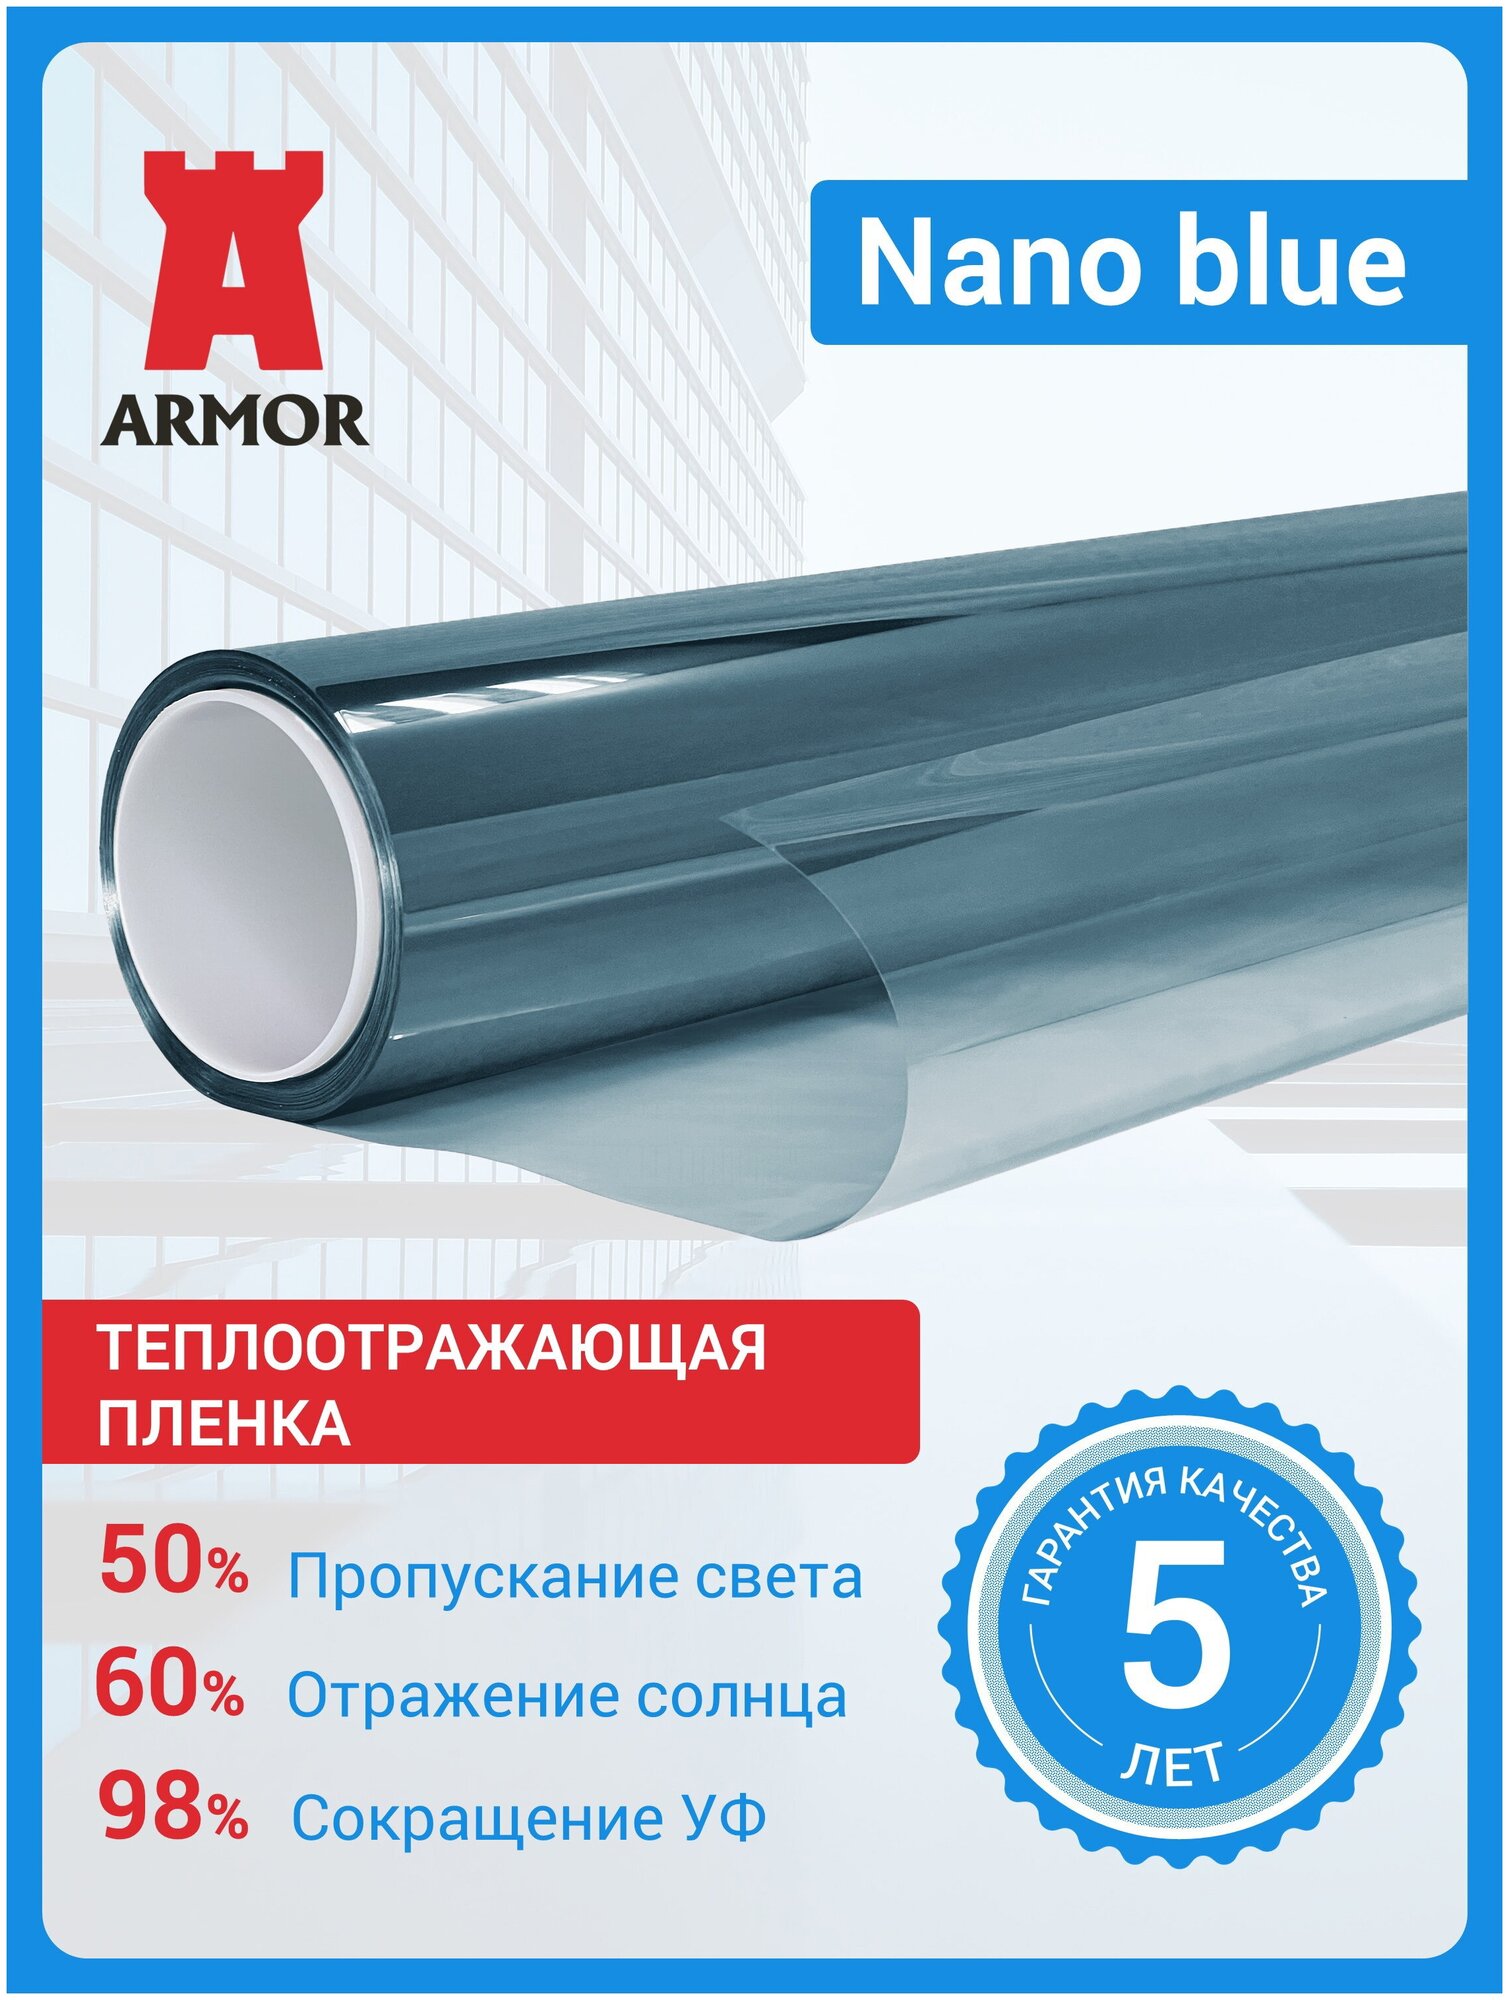 Самоклеящаяся теплоотражающая пленка для окон Nano Blue, цвет - голубой, размер 0,75 м. х 4 м. (75х400 см)